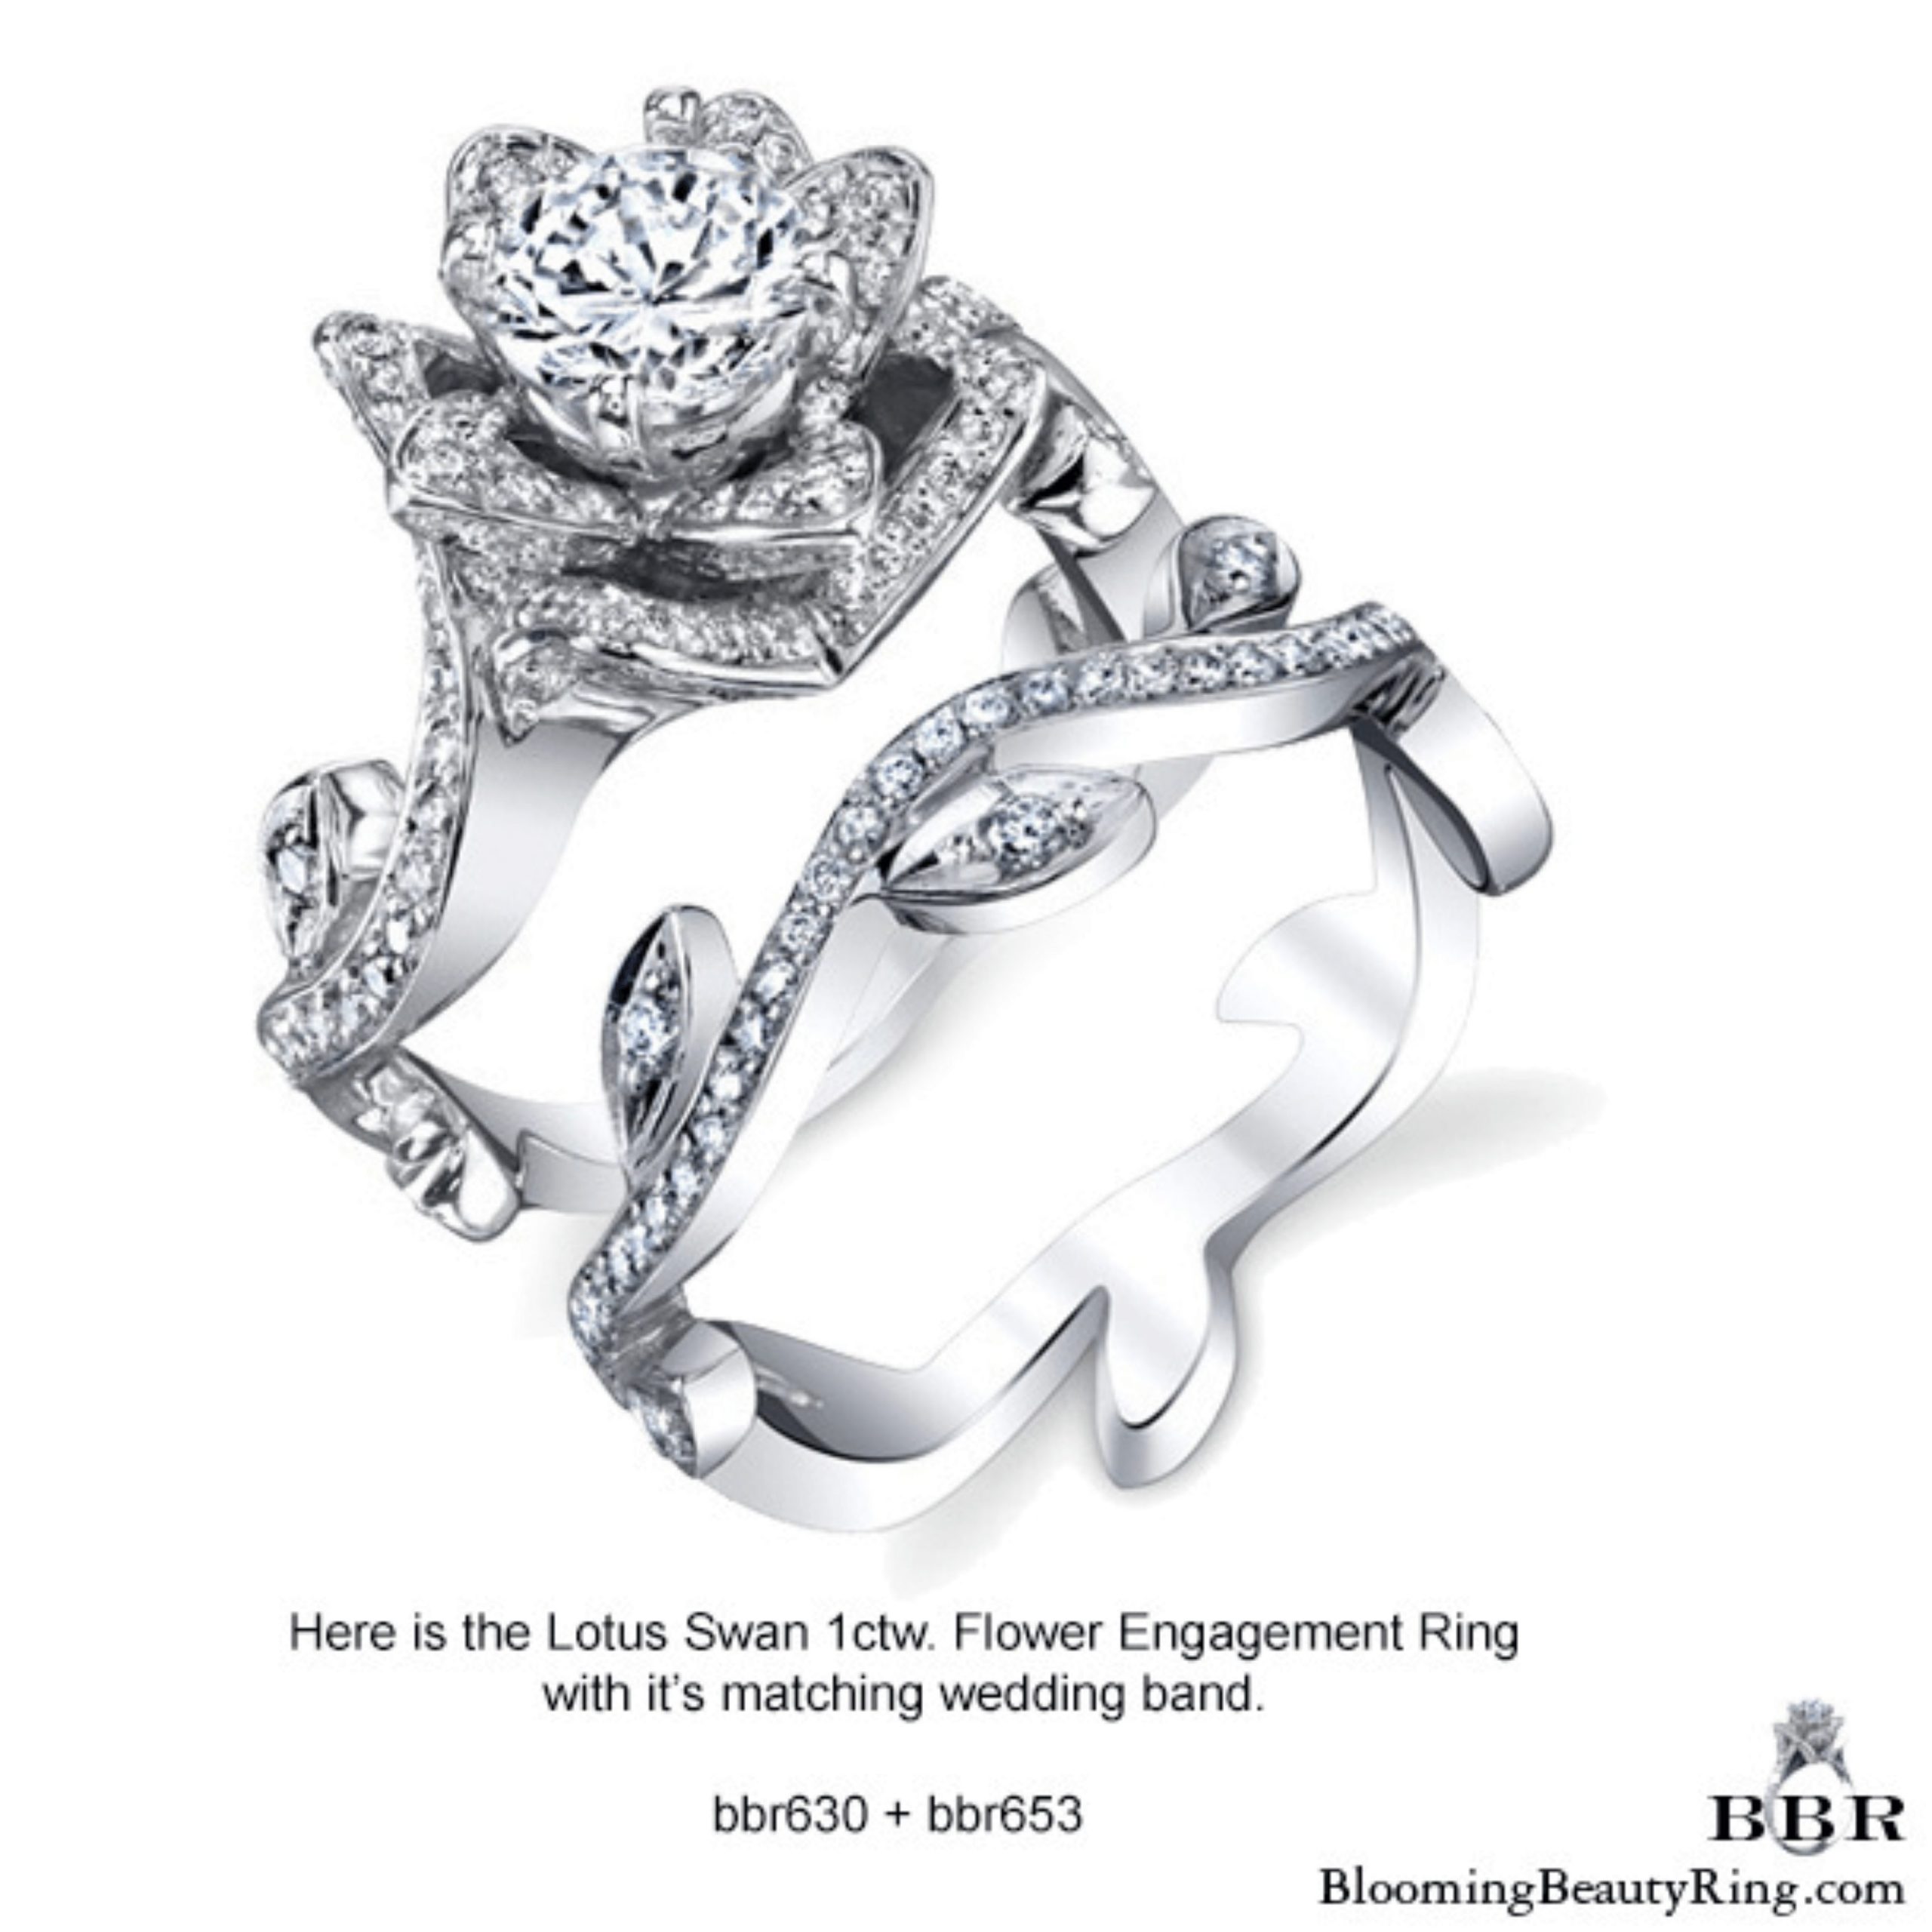 The Lotus Swan 1ct. Diamond Engagement Flower Ring – bbr630